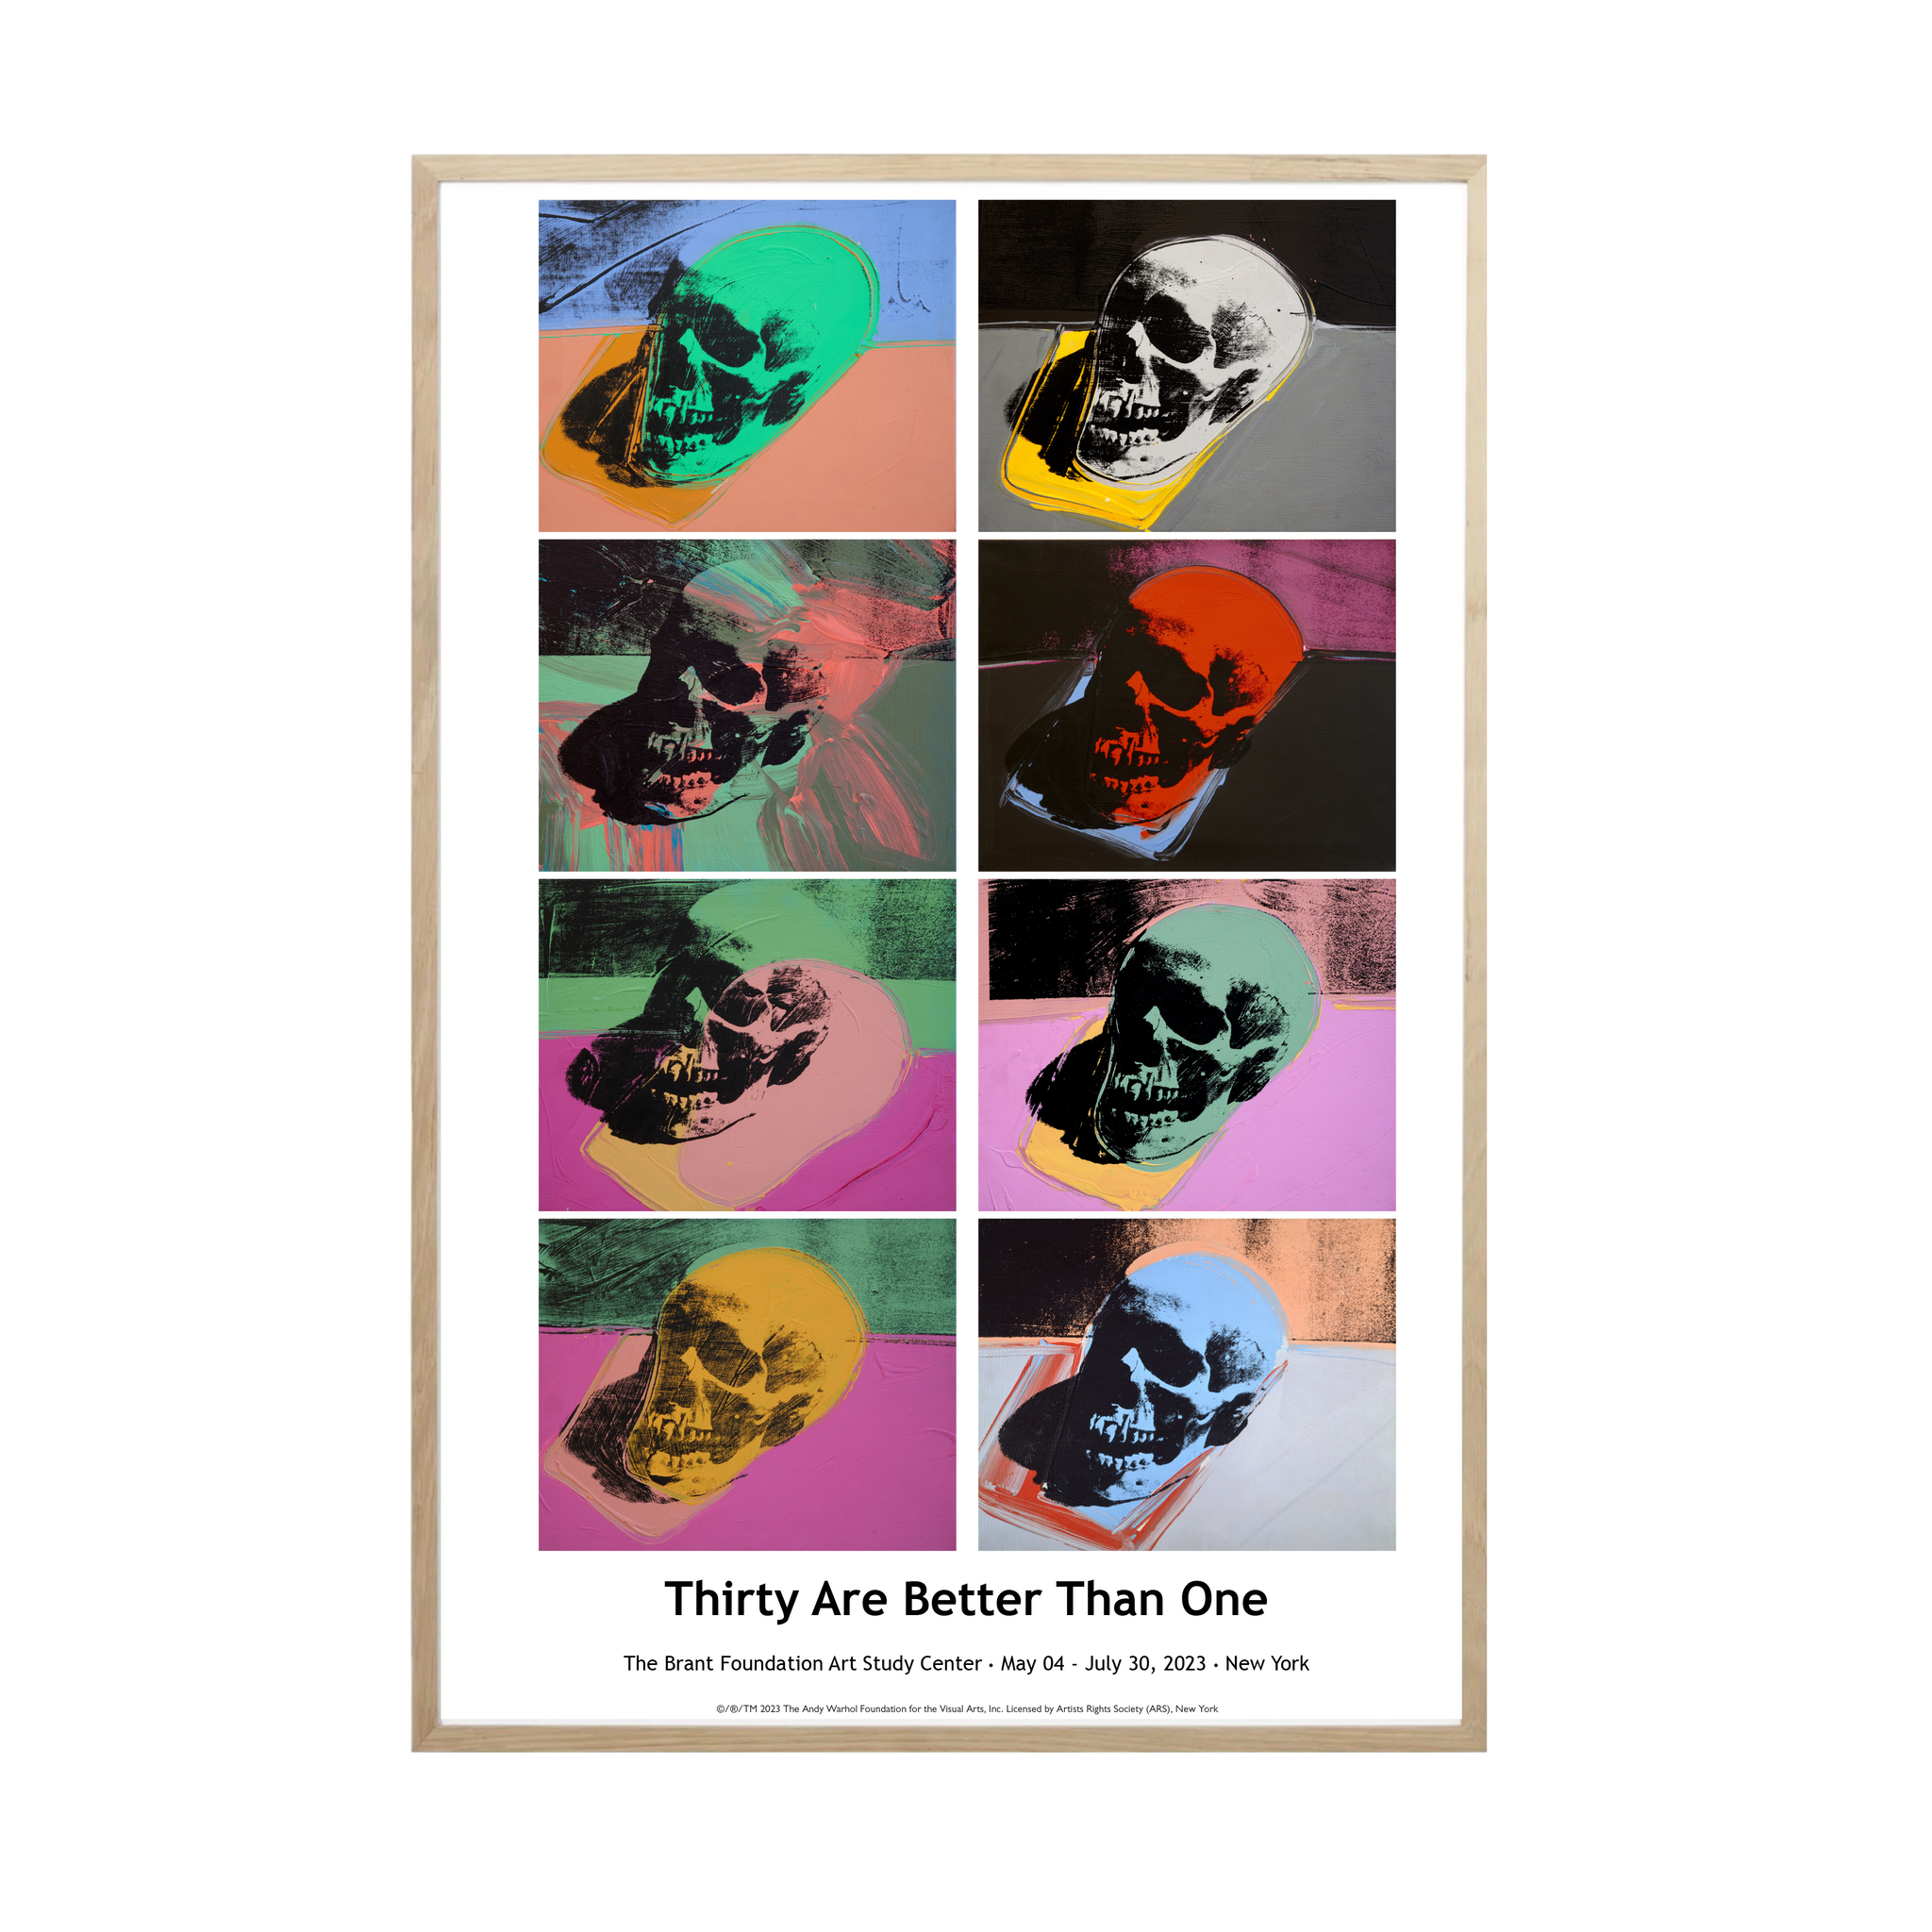 Andy Warhol "Skull" Poster